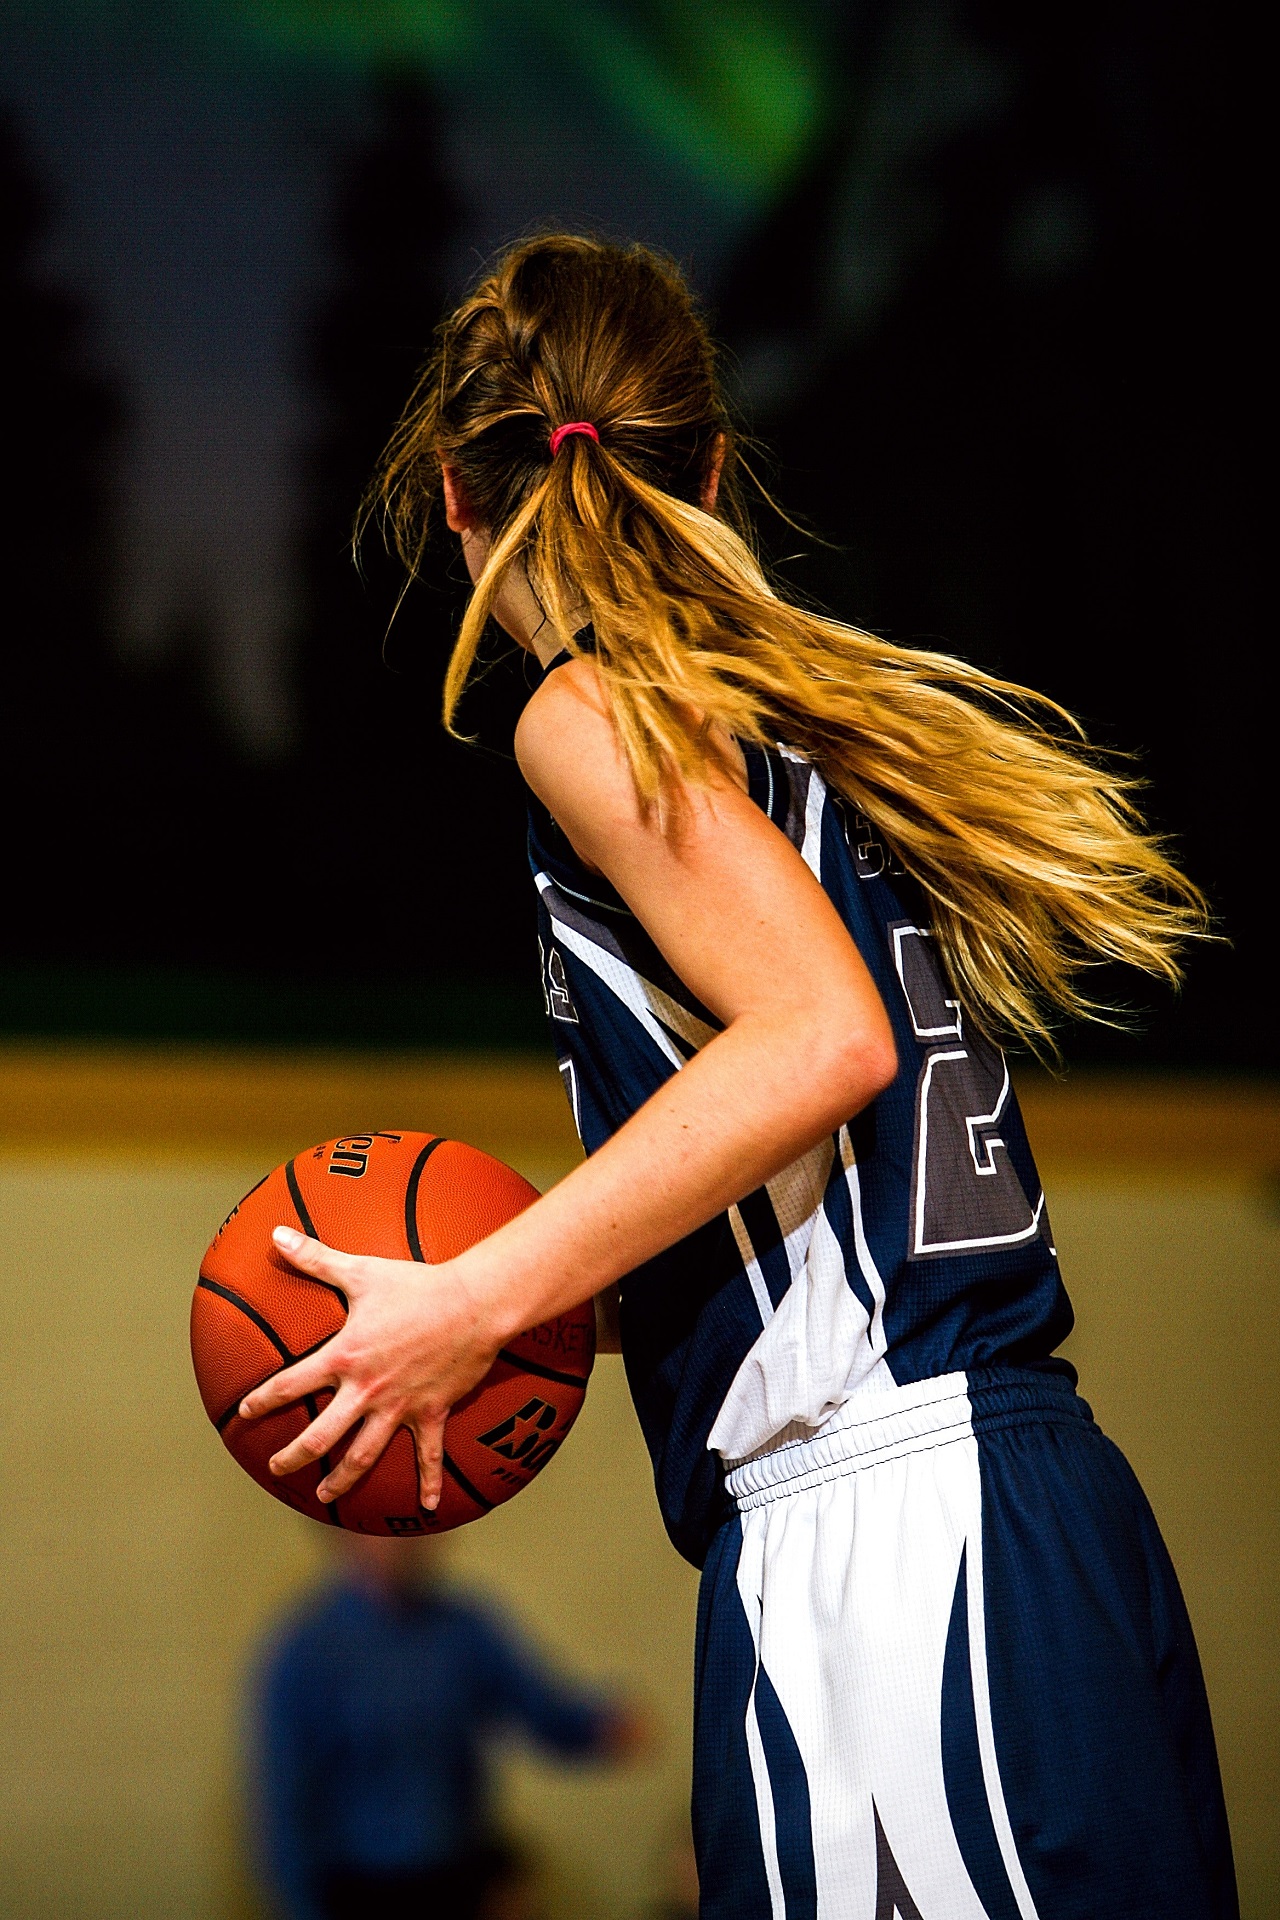 Image of athletic female basketball player